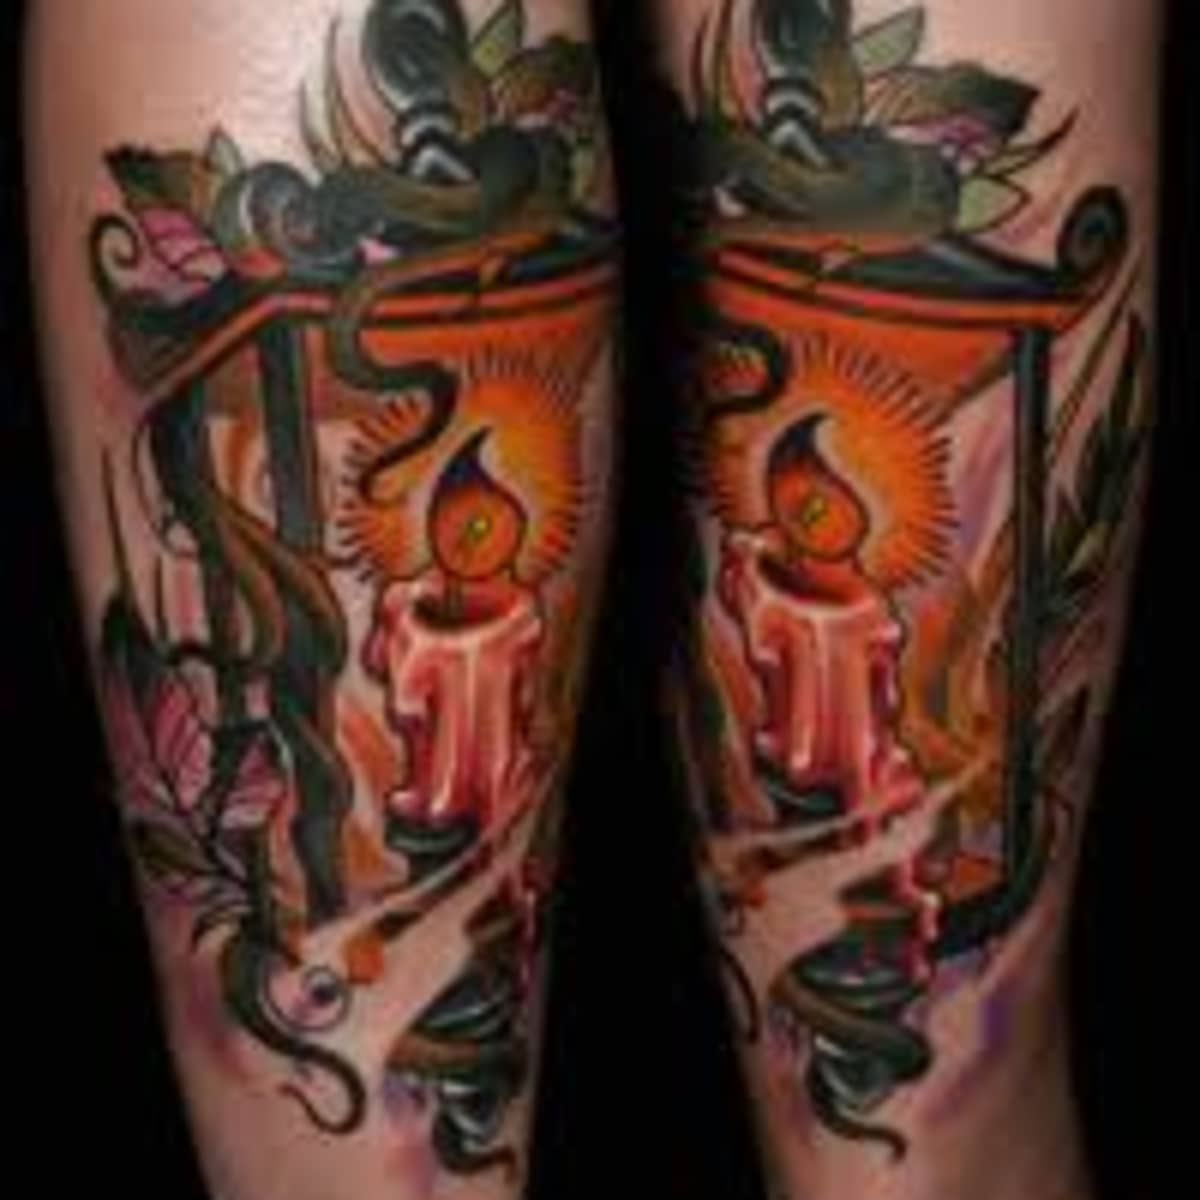 Candle Tattoo - Best Tattoo Ideas Gallery